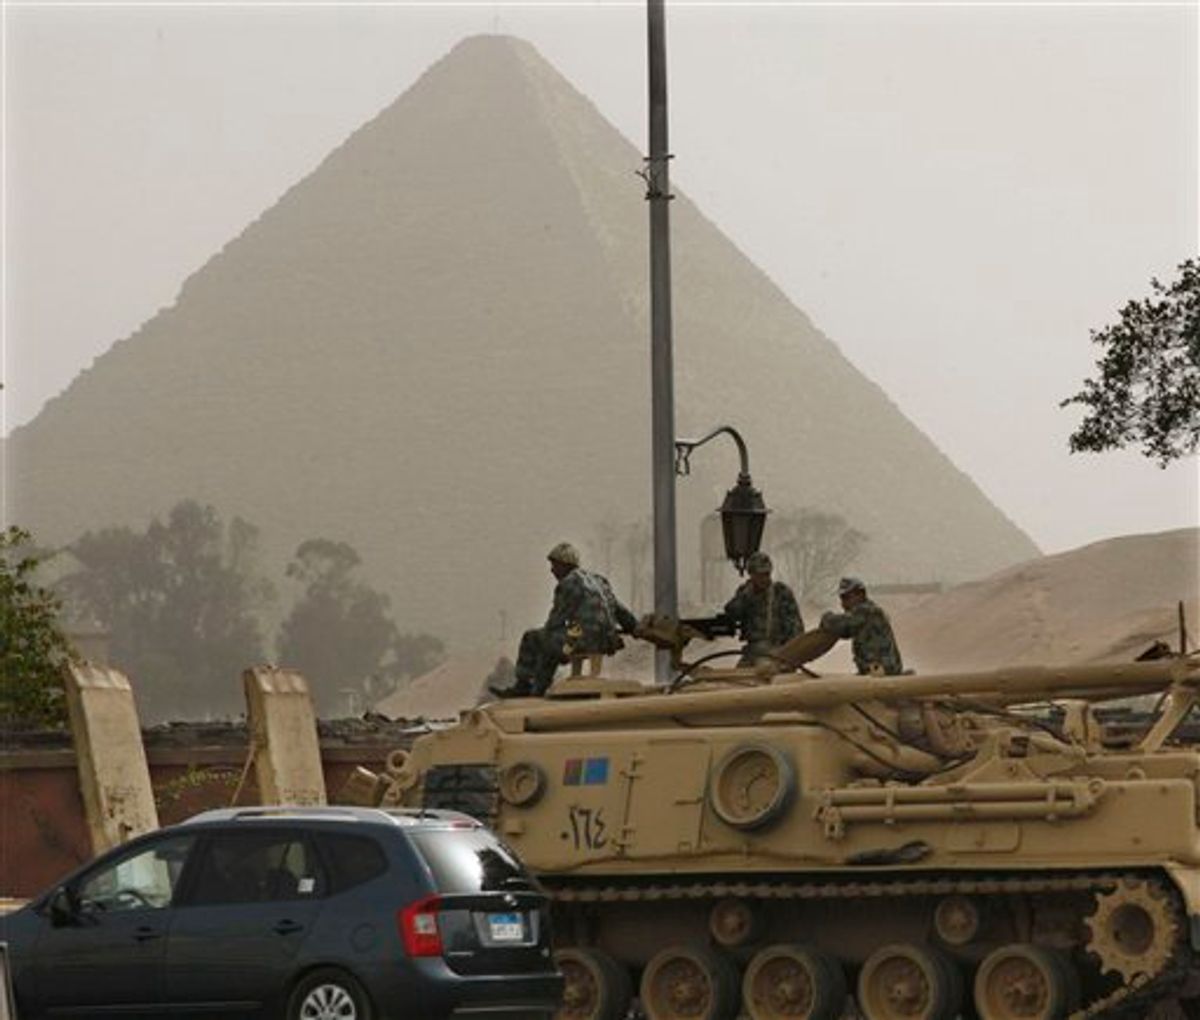 An Egyptian APC vehicle drives near the Pyramids, in Giza, Egypt, Saturday, Jan. 29, 2011. The Pyramids are closed to tourists. (AP Photo/Victoria Hazou) (AP)